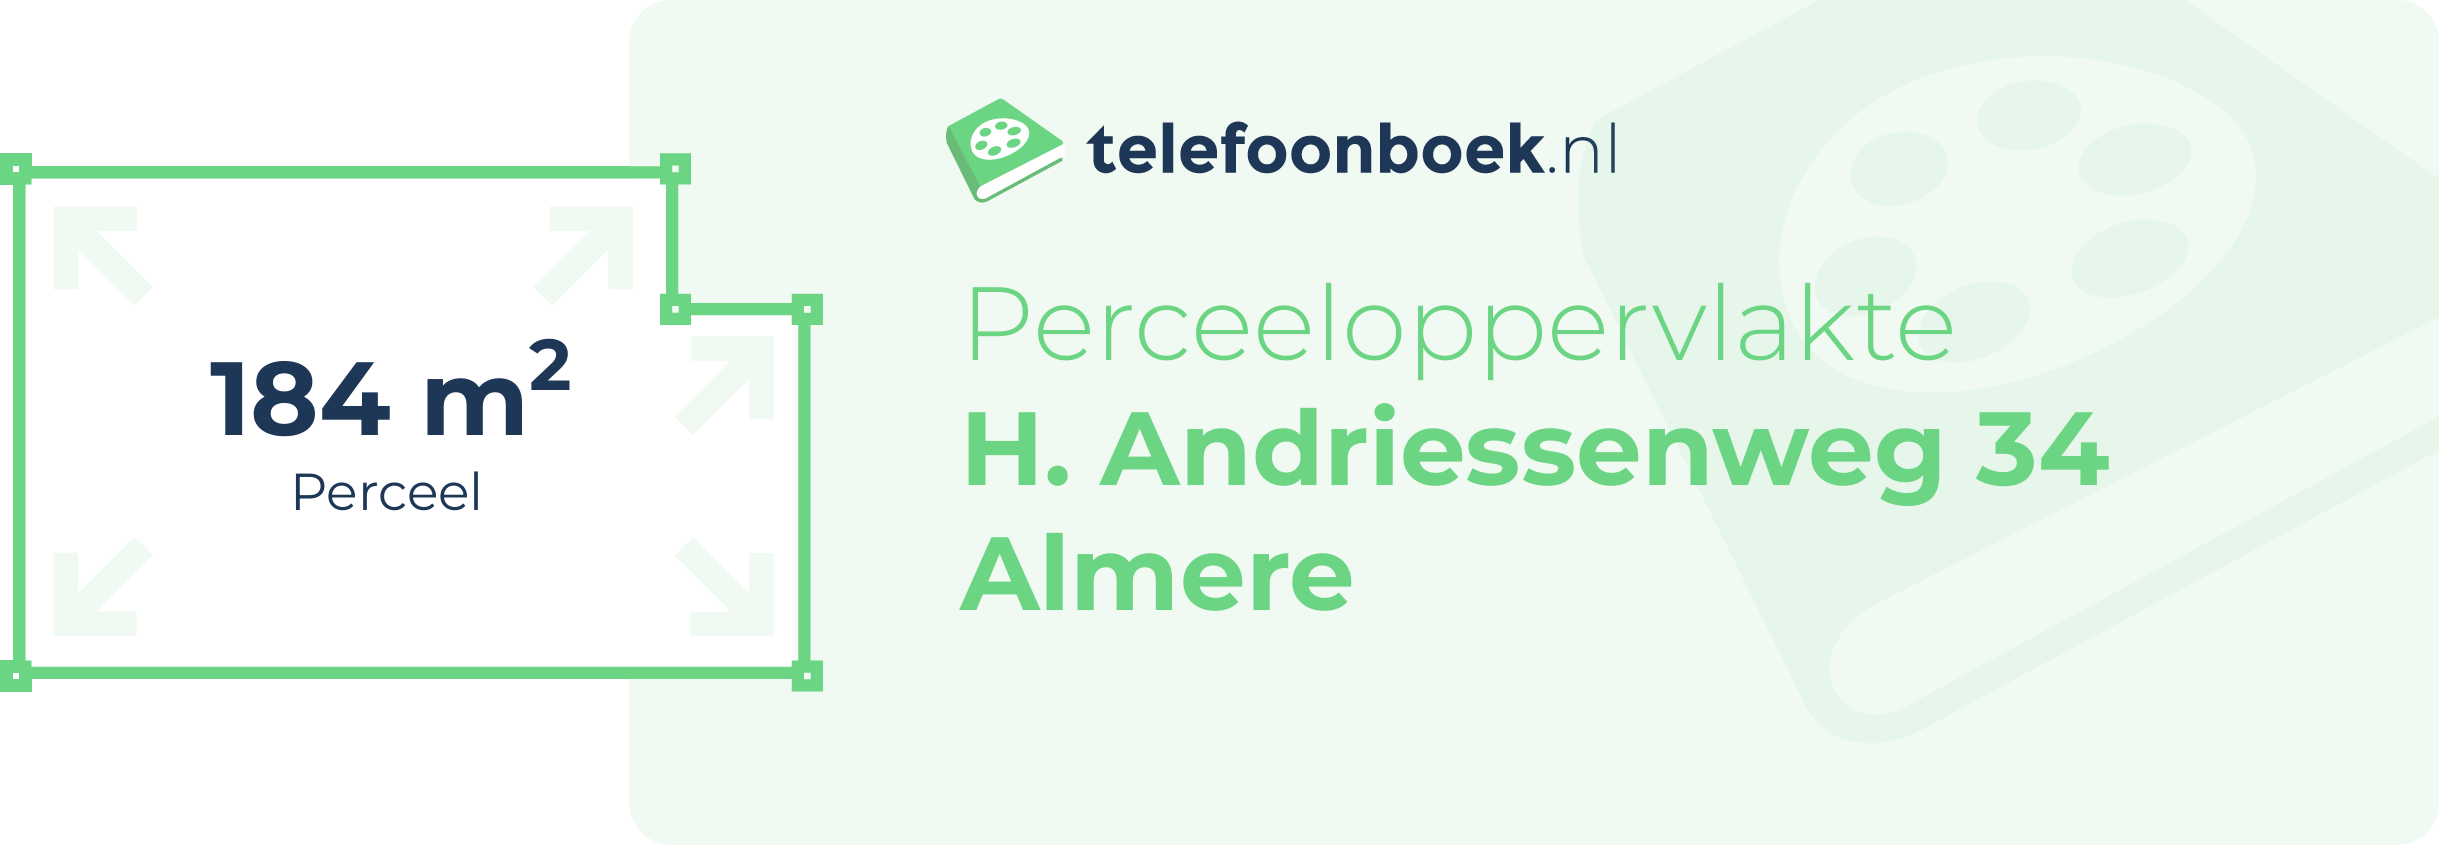 Perceeloppervlakte H. Andriessenweg 34 Almere